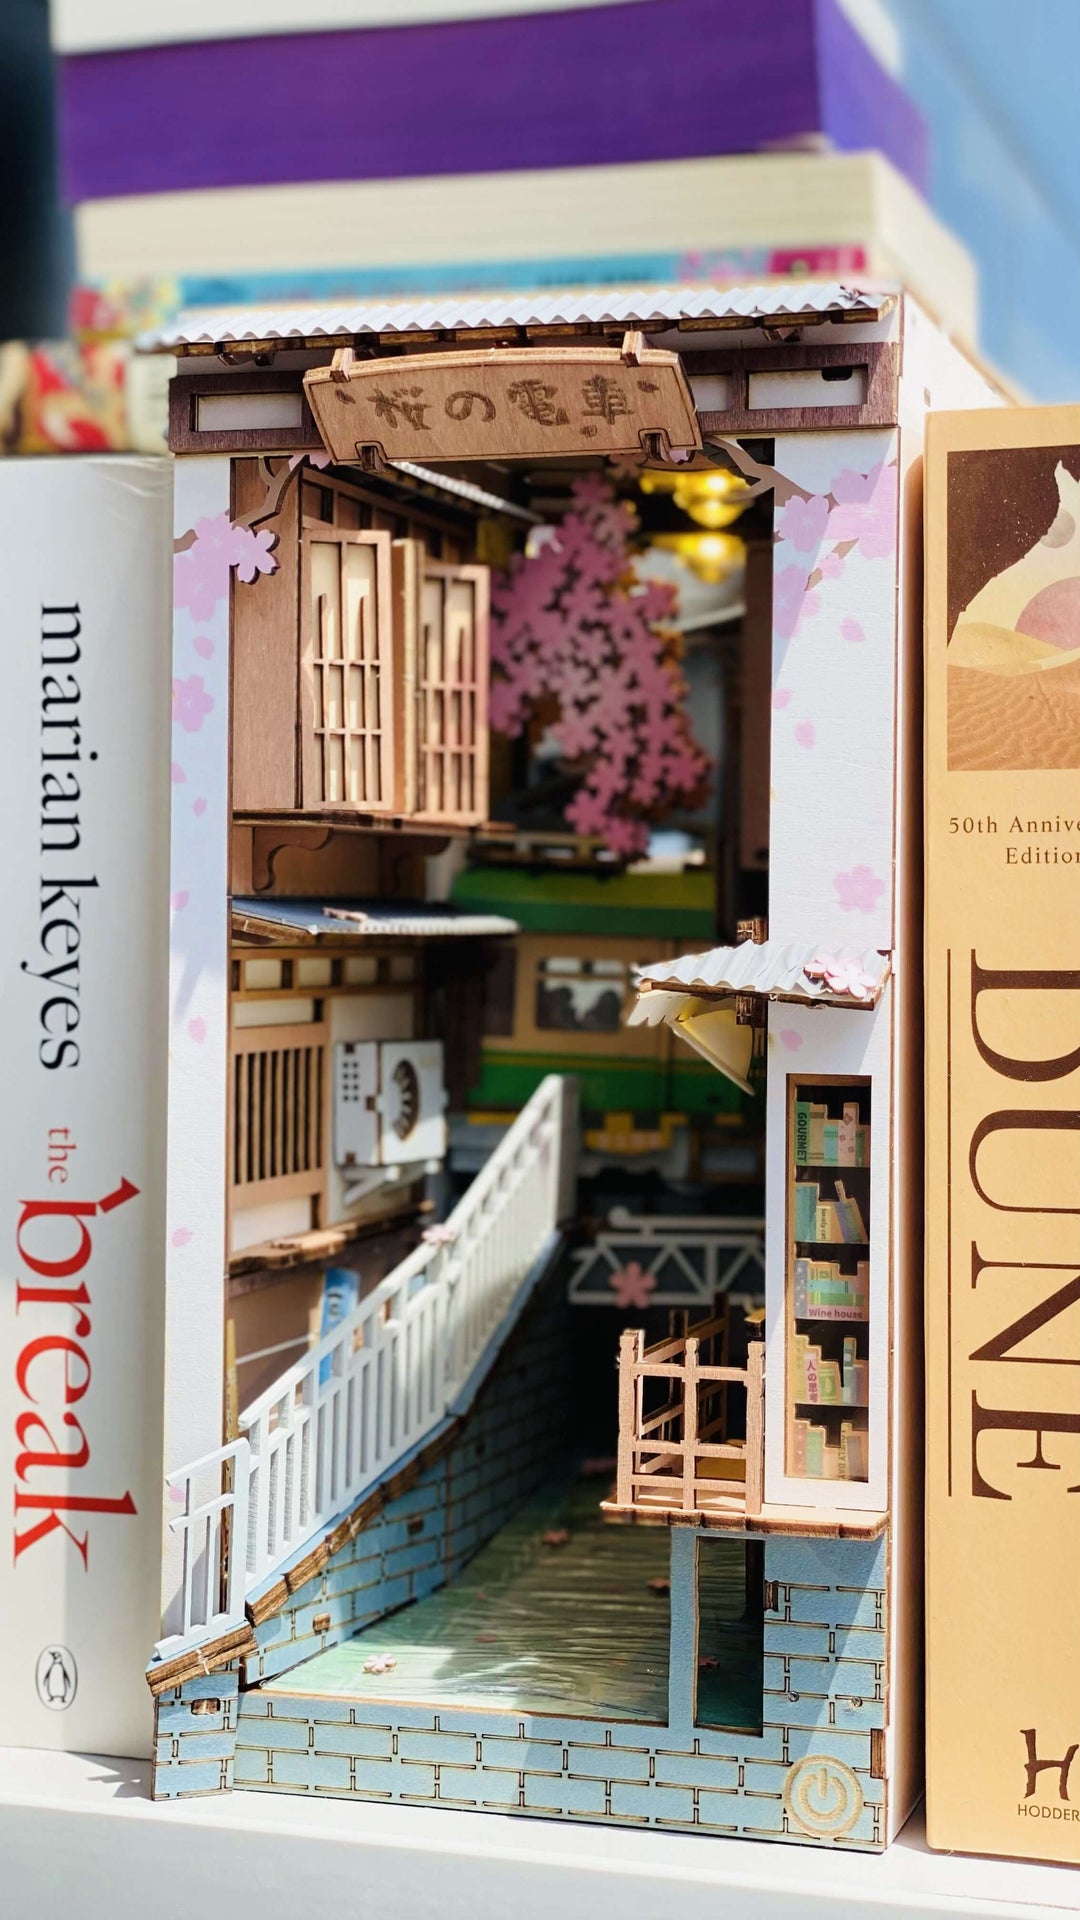 Sakura Densya Miniature Book Nook Shelf Insert, Anavrin